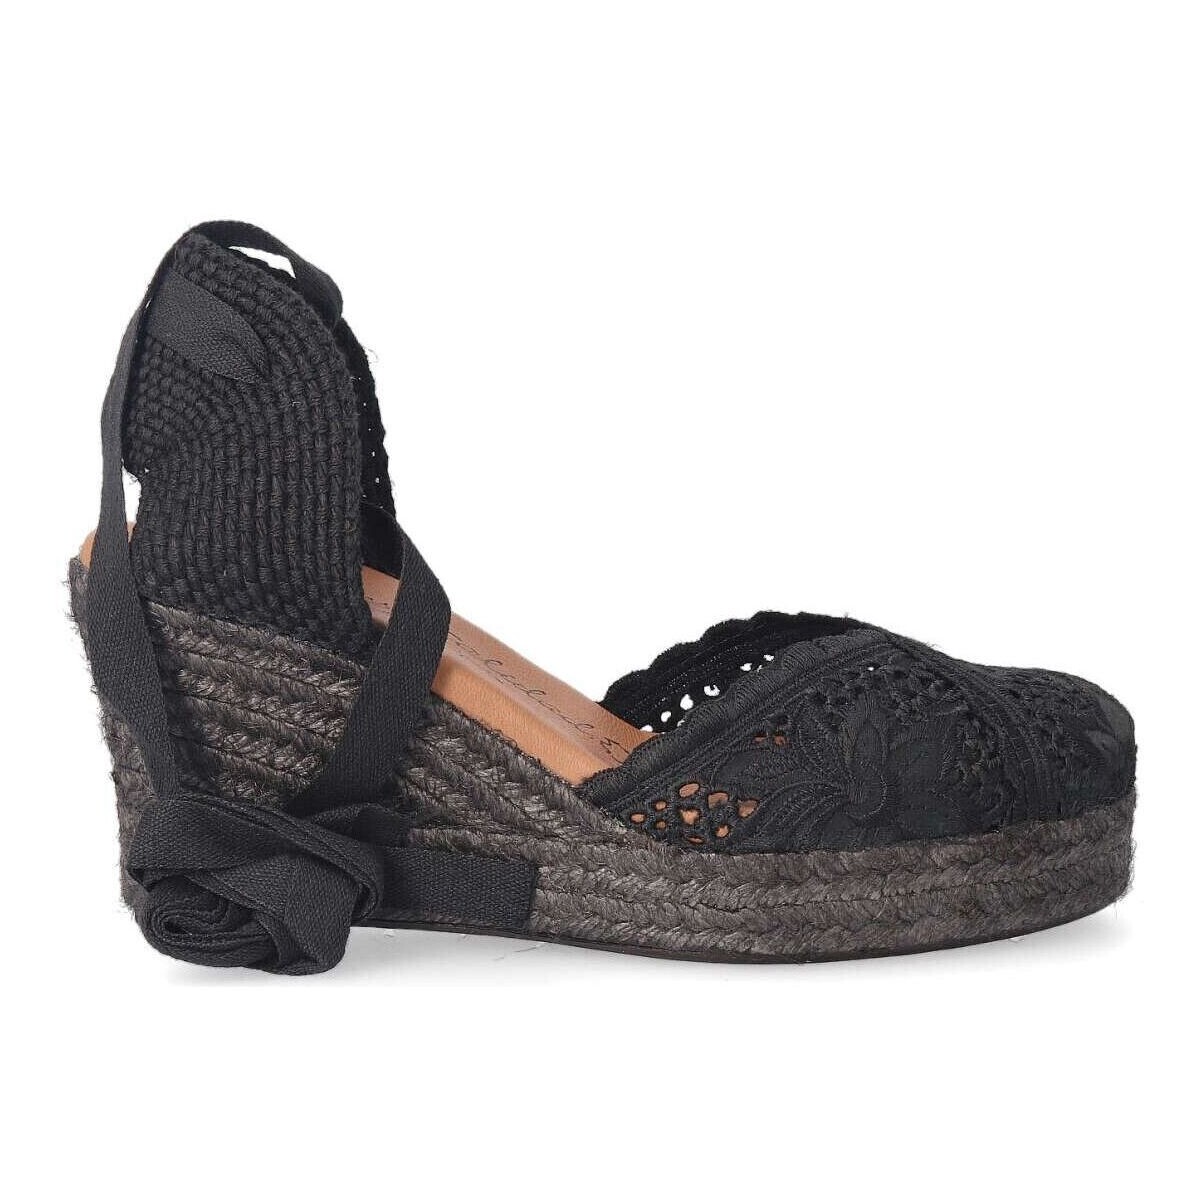 Zapatos Mujer Alpargatas Torres 6004 Negro